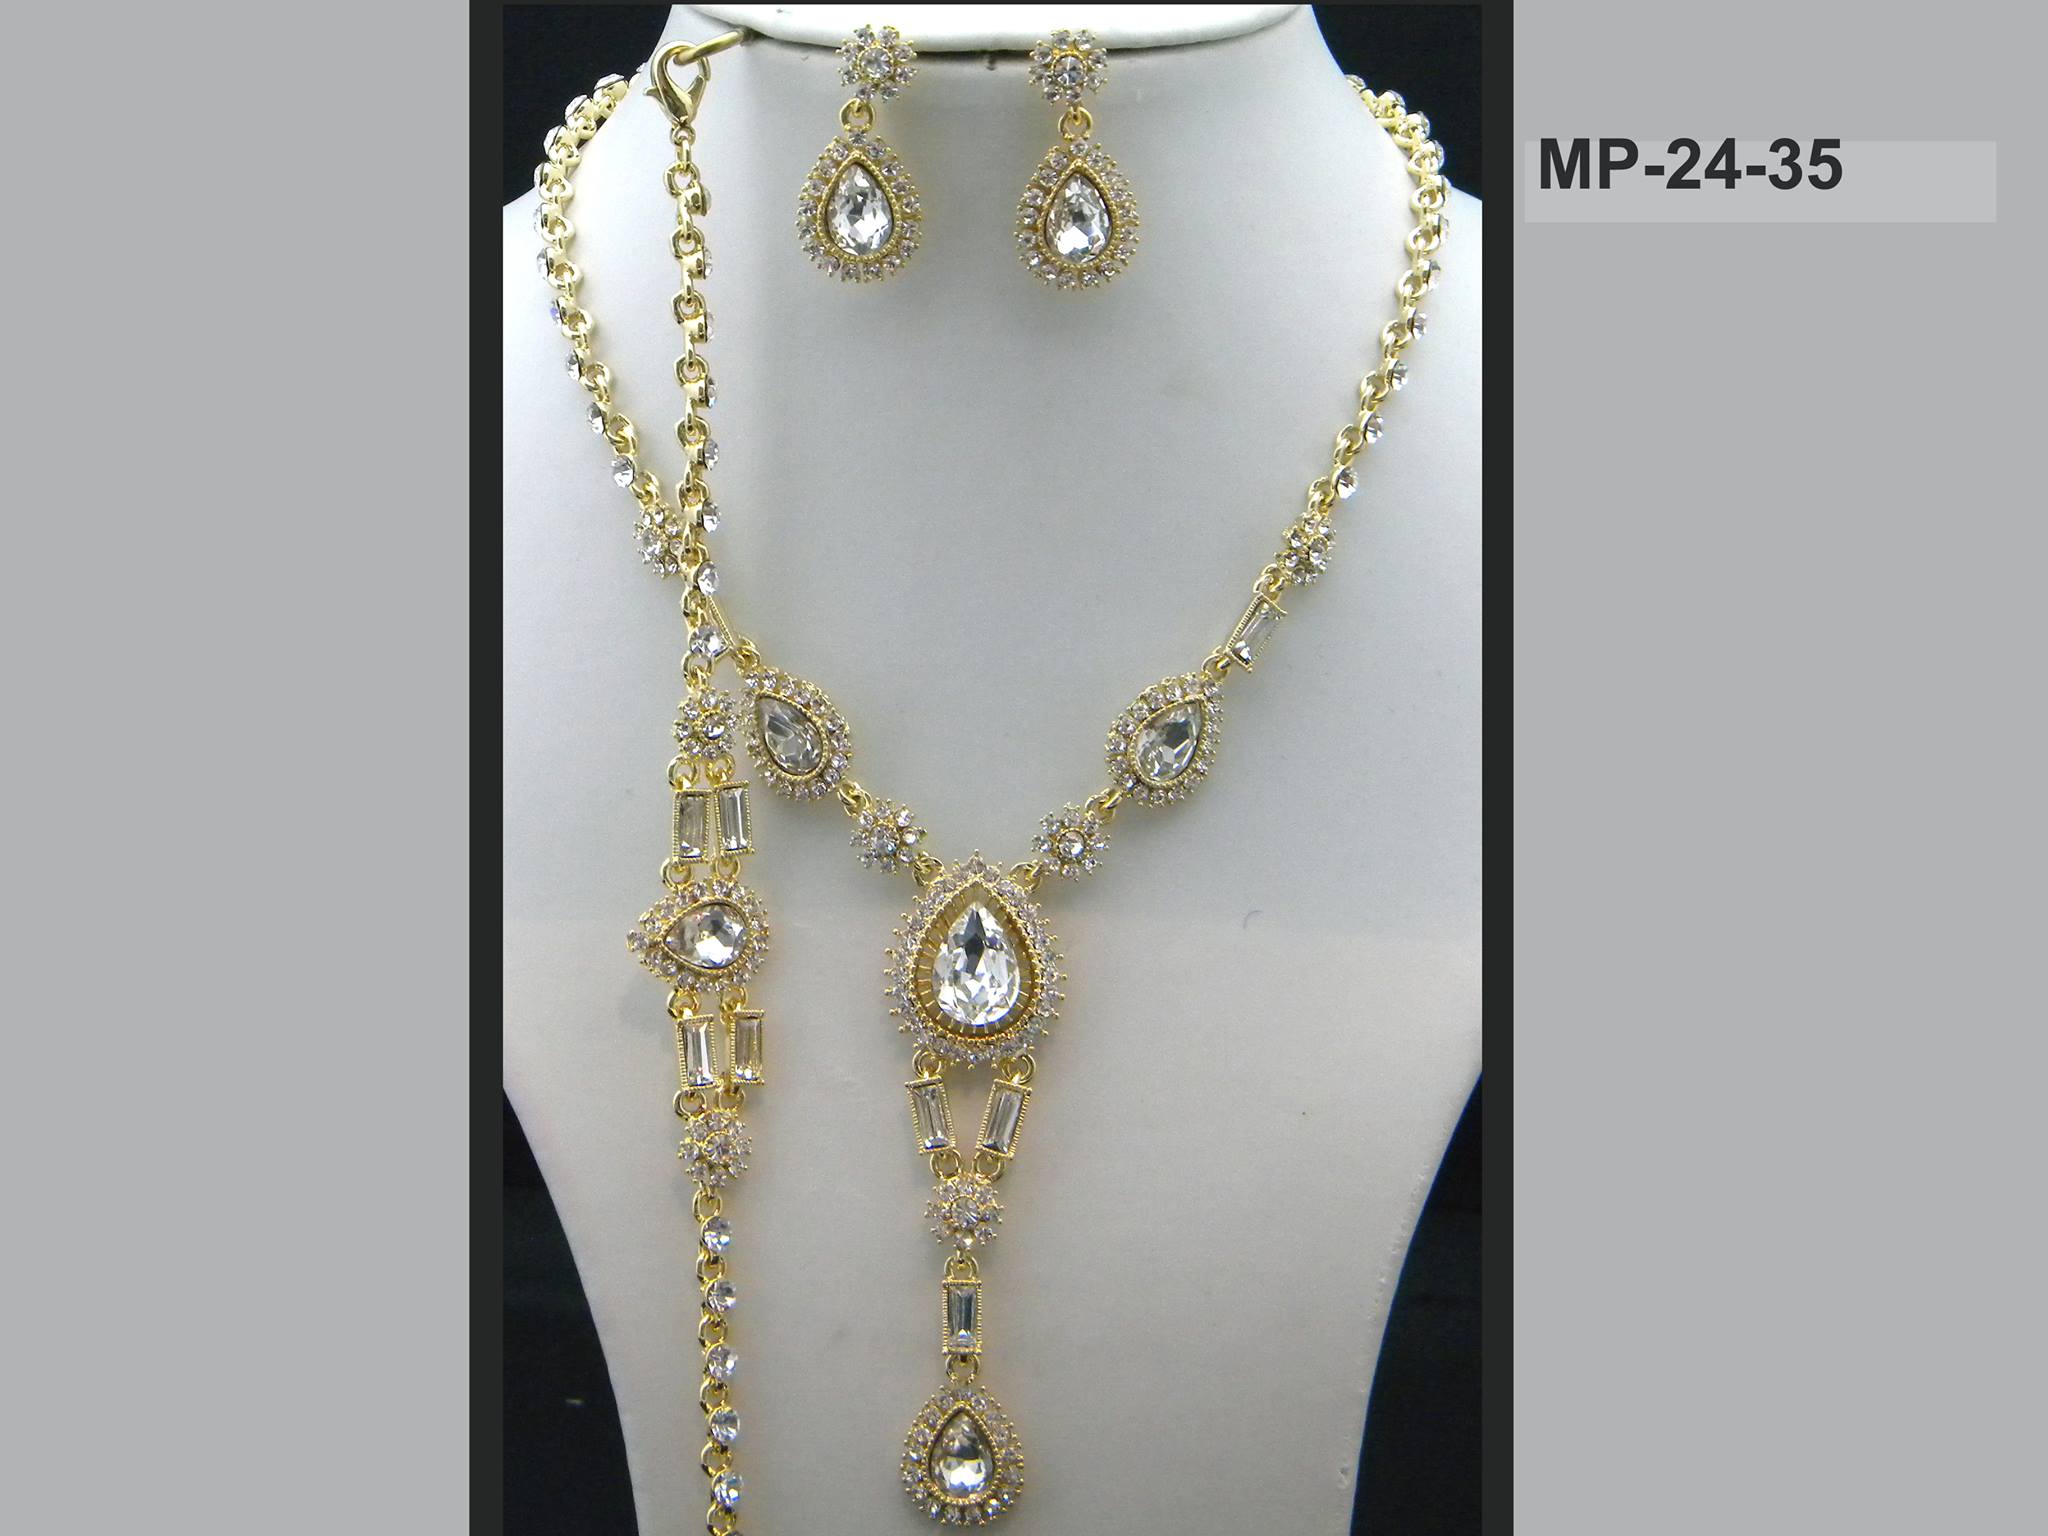 Jewelry Style No. MP 24